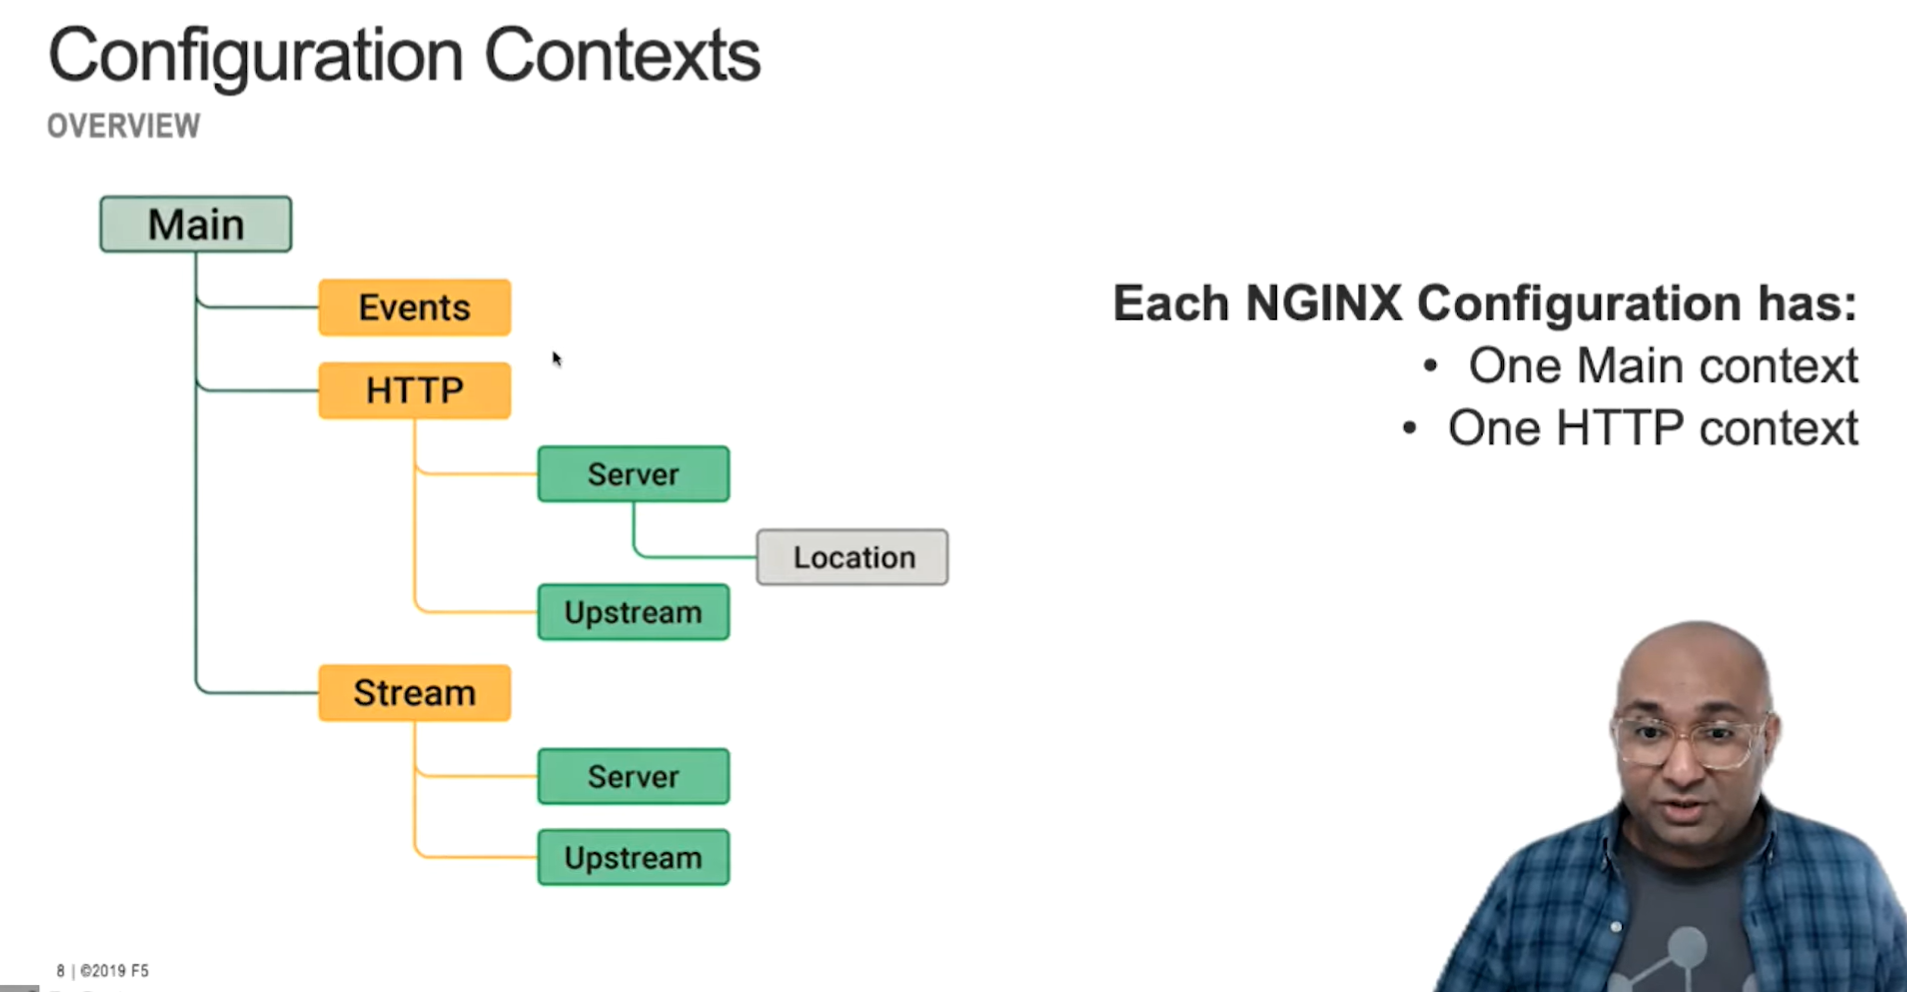 NGINX configuration contexts